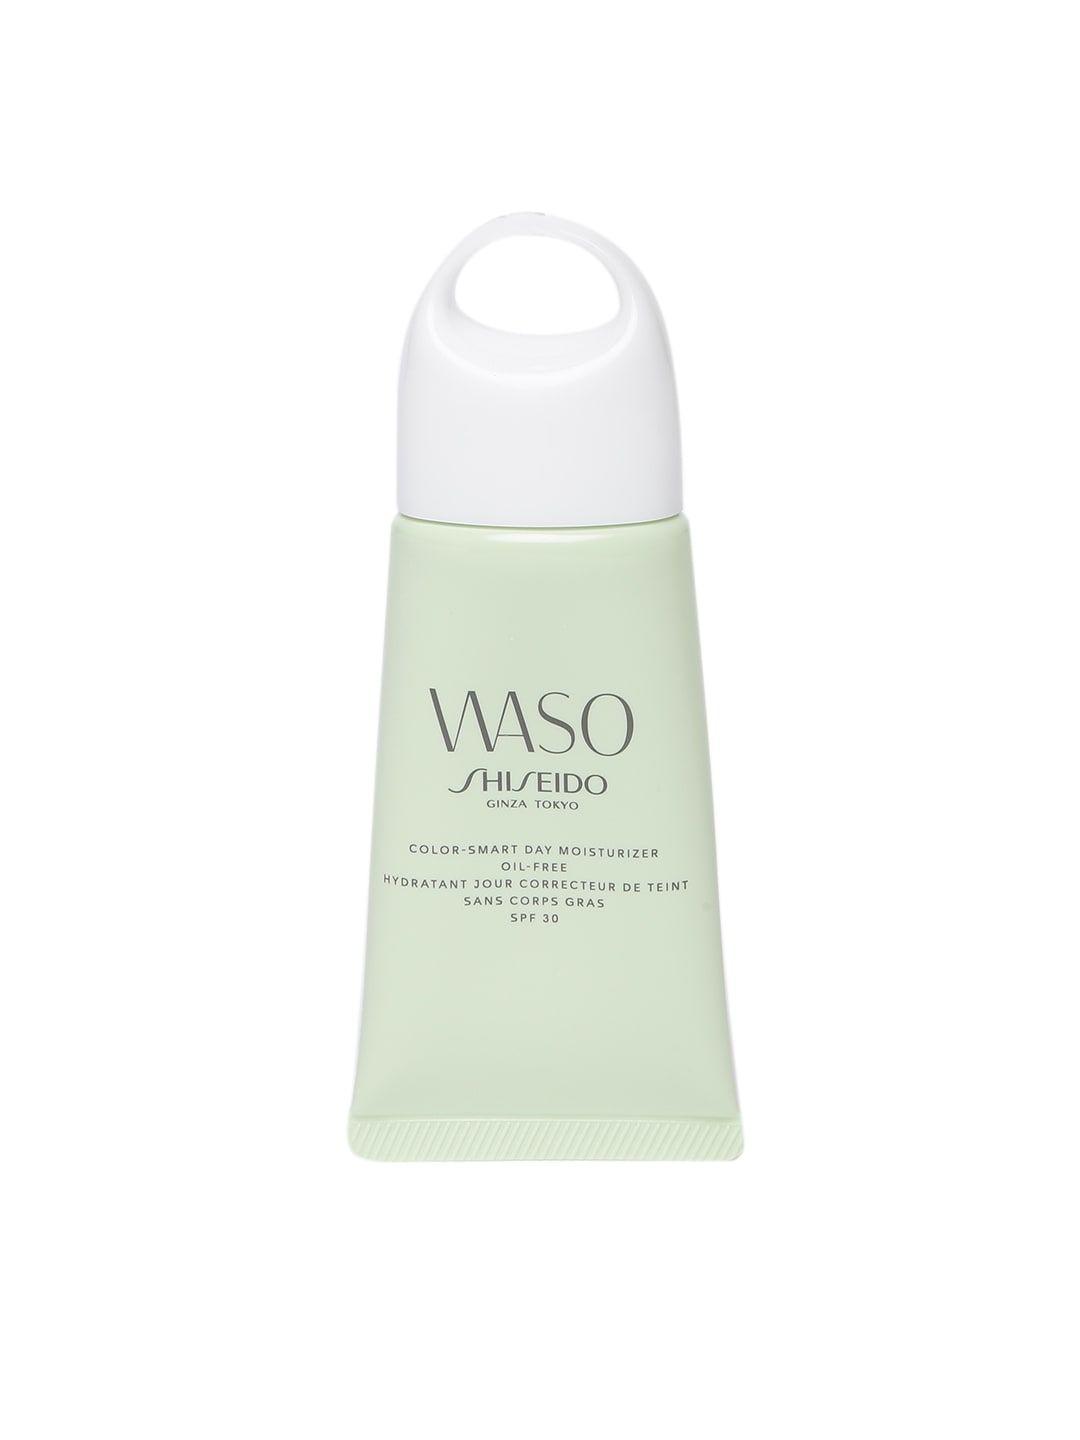 shiseido waso color smart day time spf 30 moisturzier oil free 50 ml